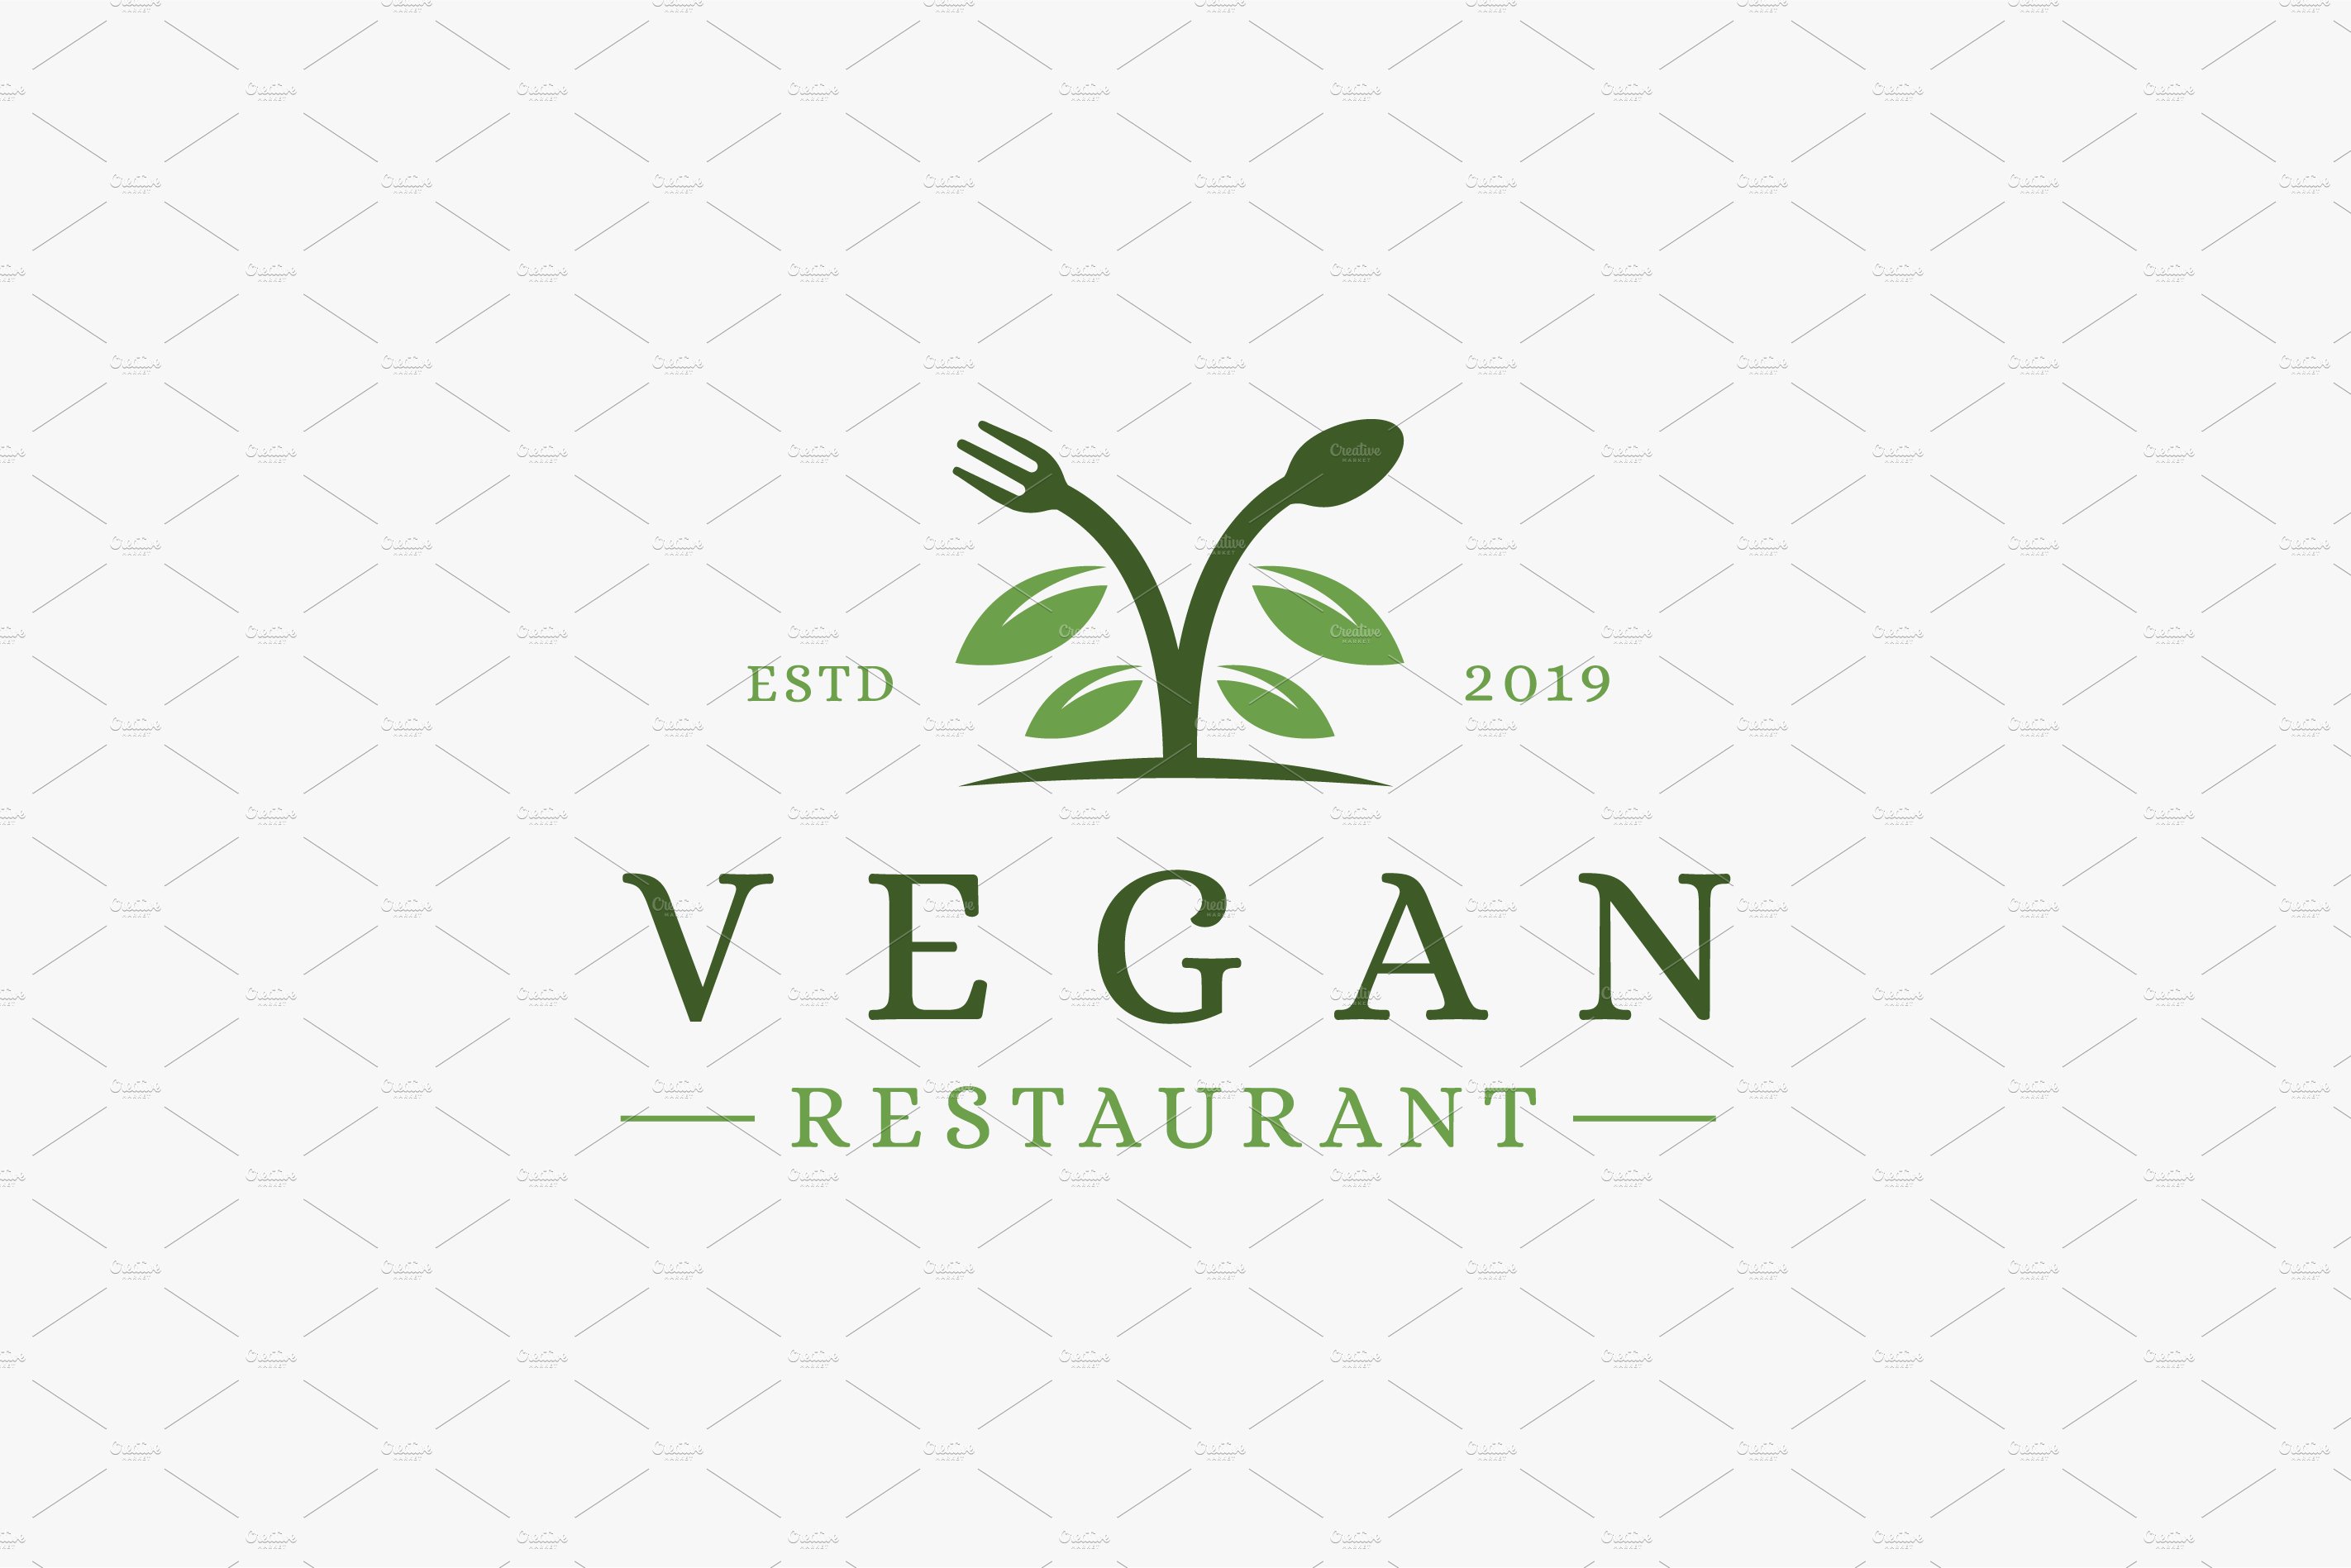 Organic, vegan restaurant logo cover image.